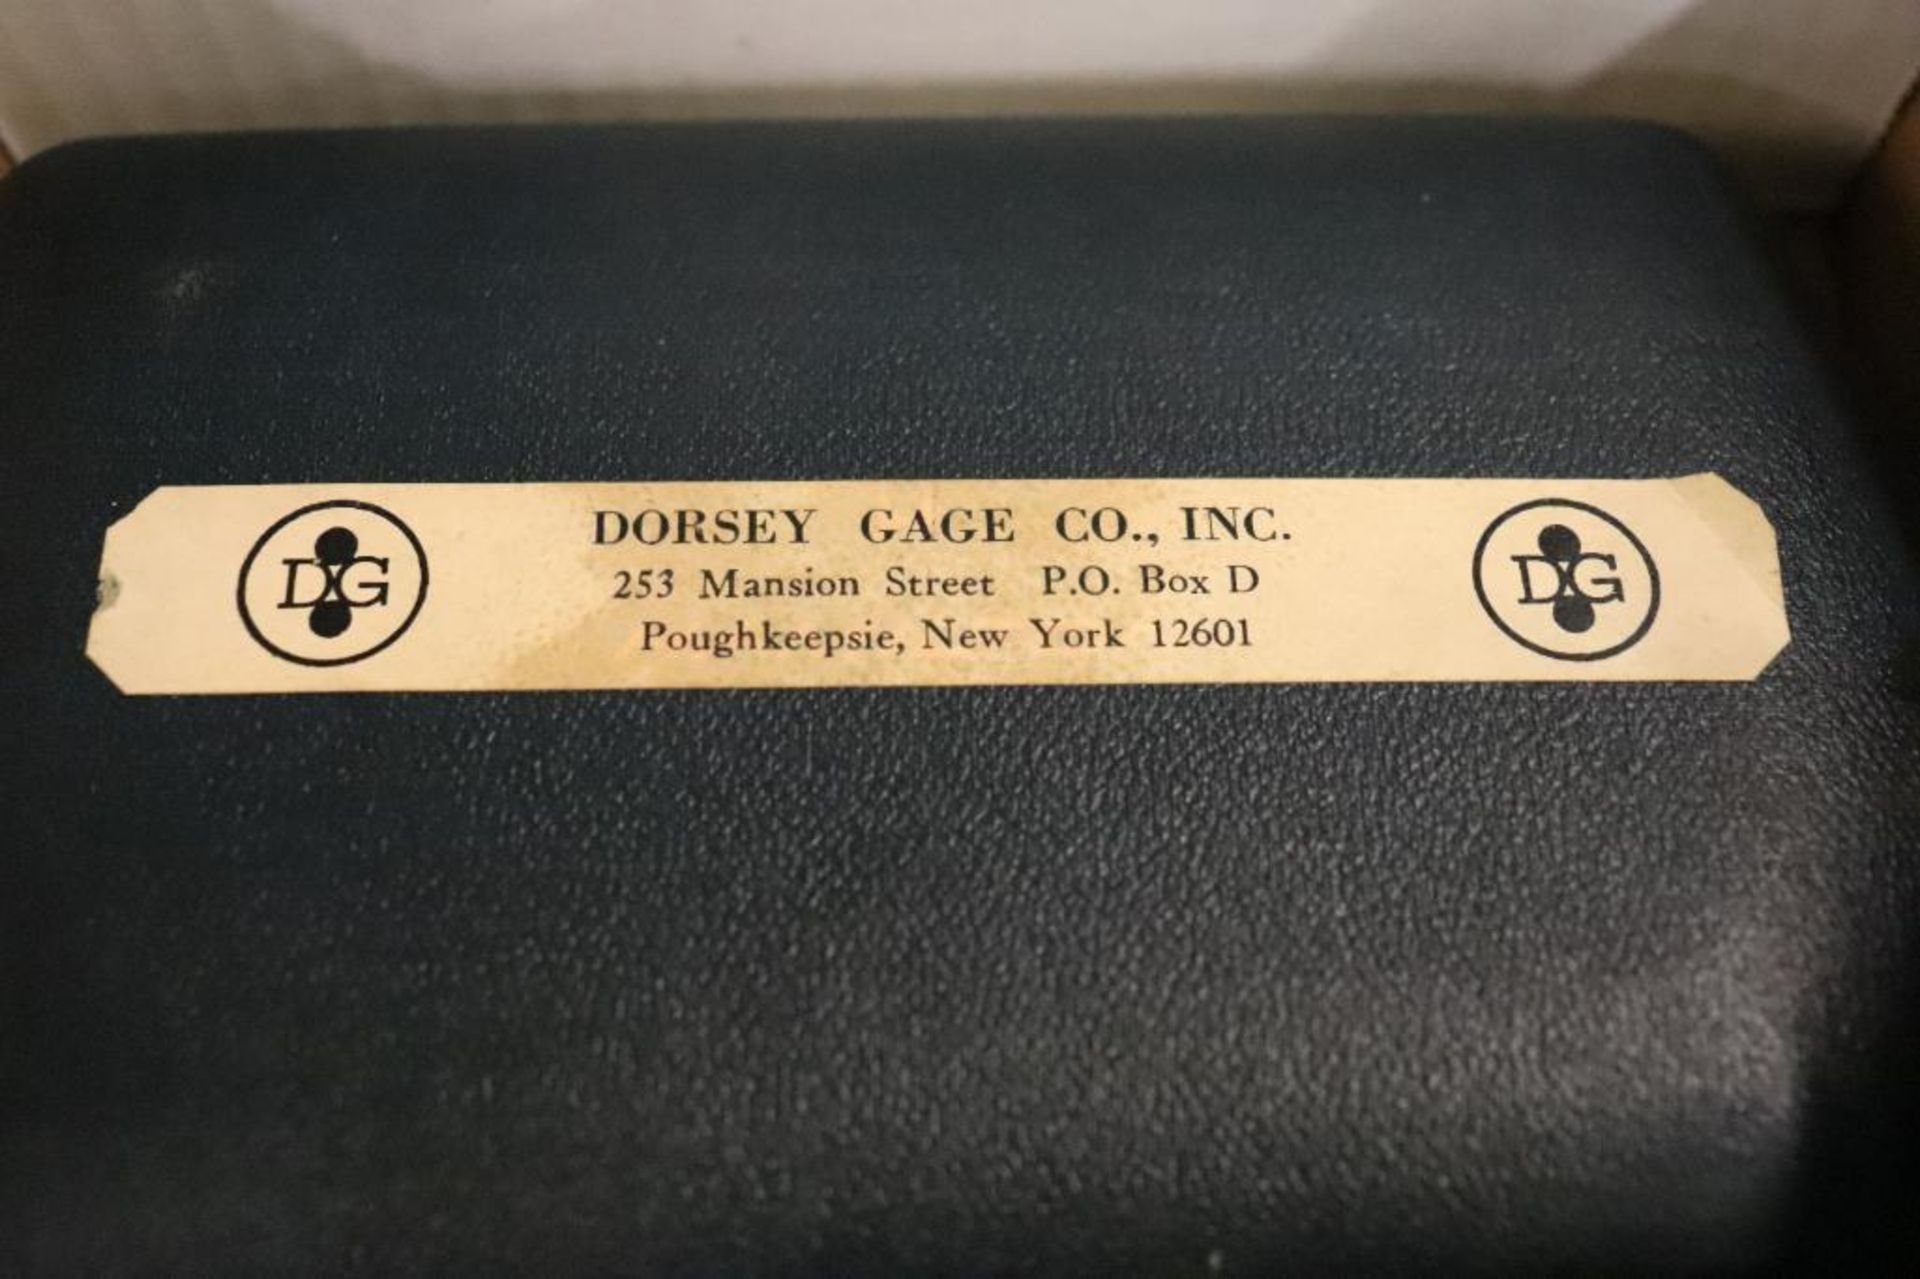 Dorsey Gage Co. model TI4-006 dial indicator set, 0-1" thread micrometer set - Image 2 of 7